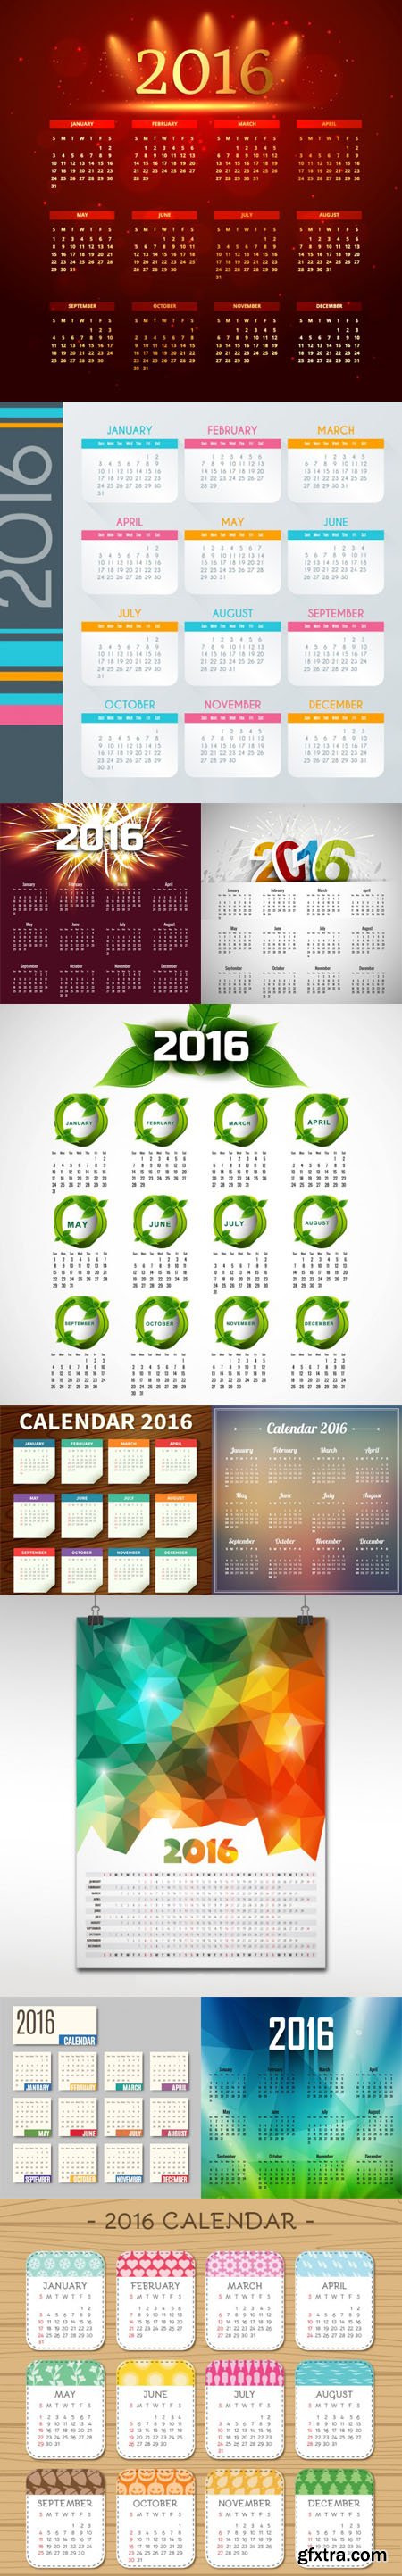 2016 New Year Calendars in Vector [Vol.2]